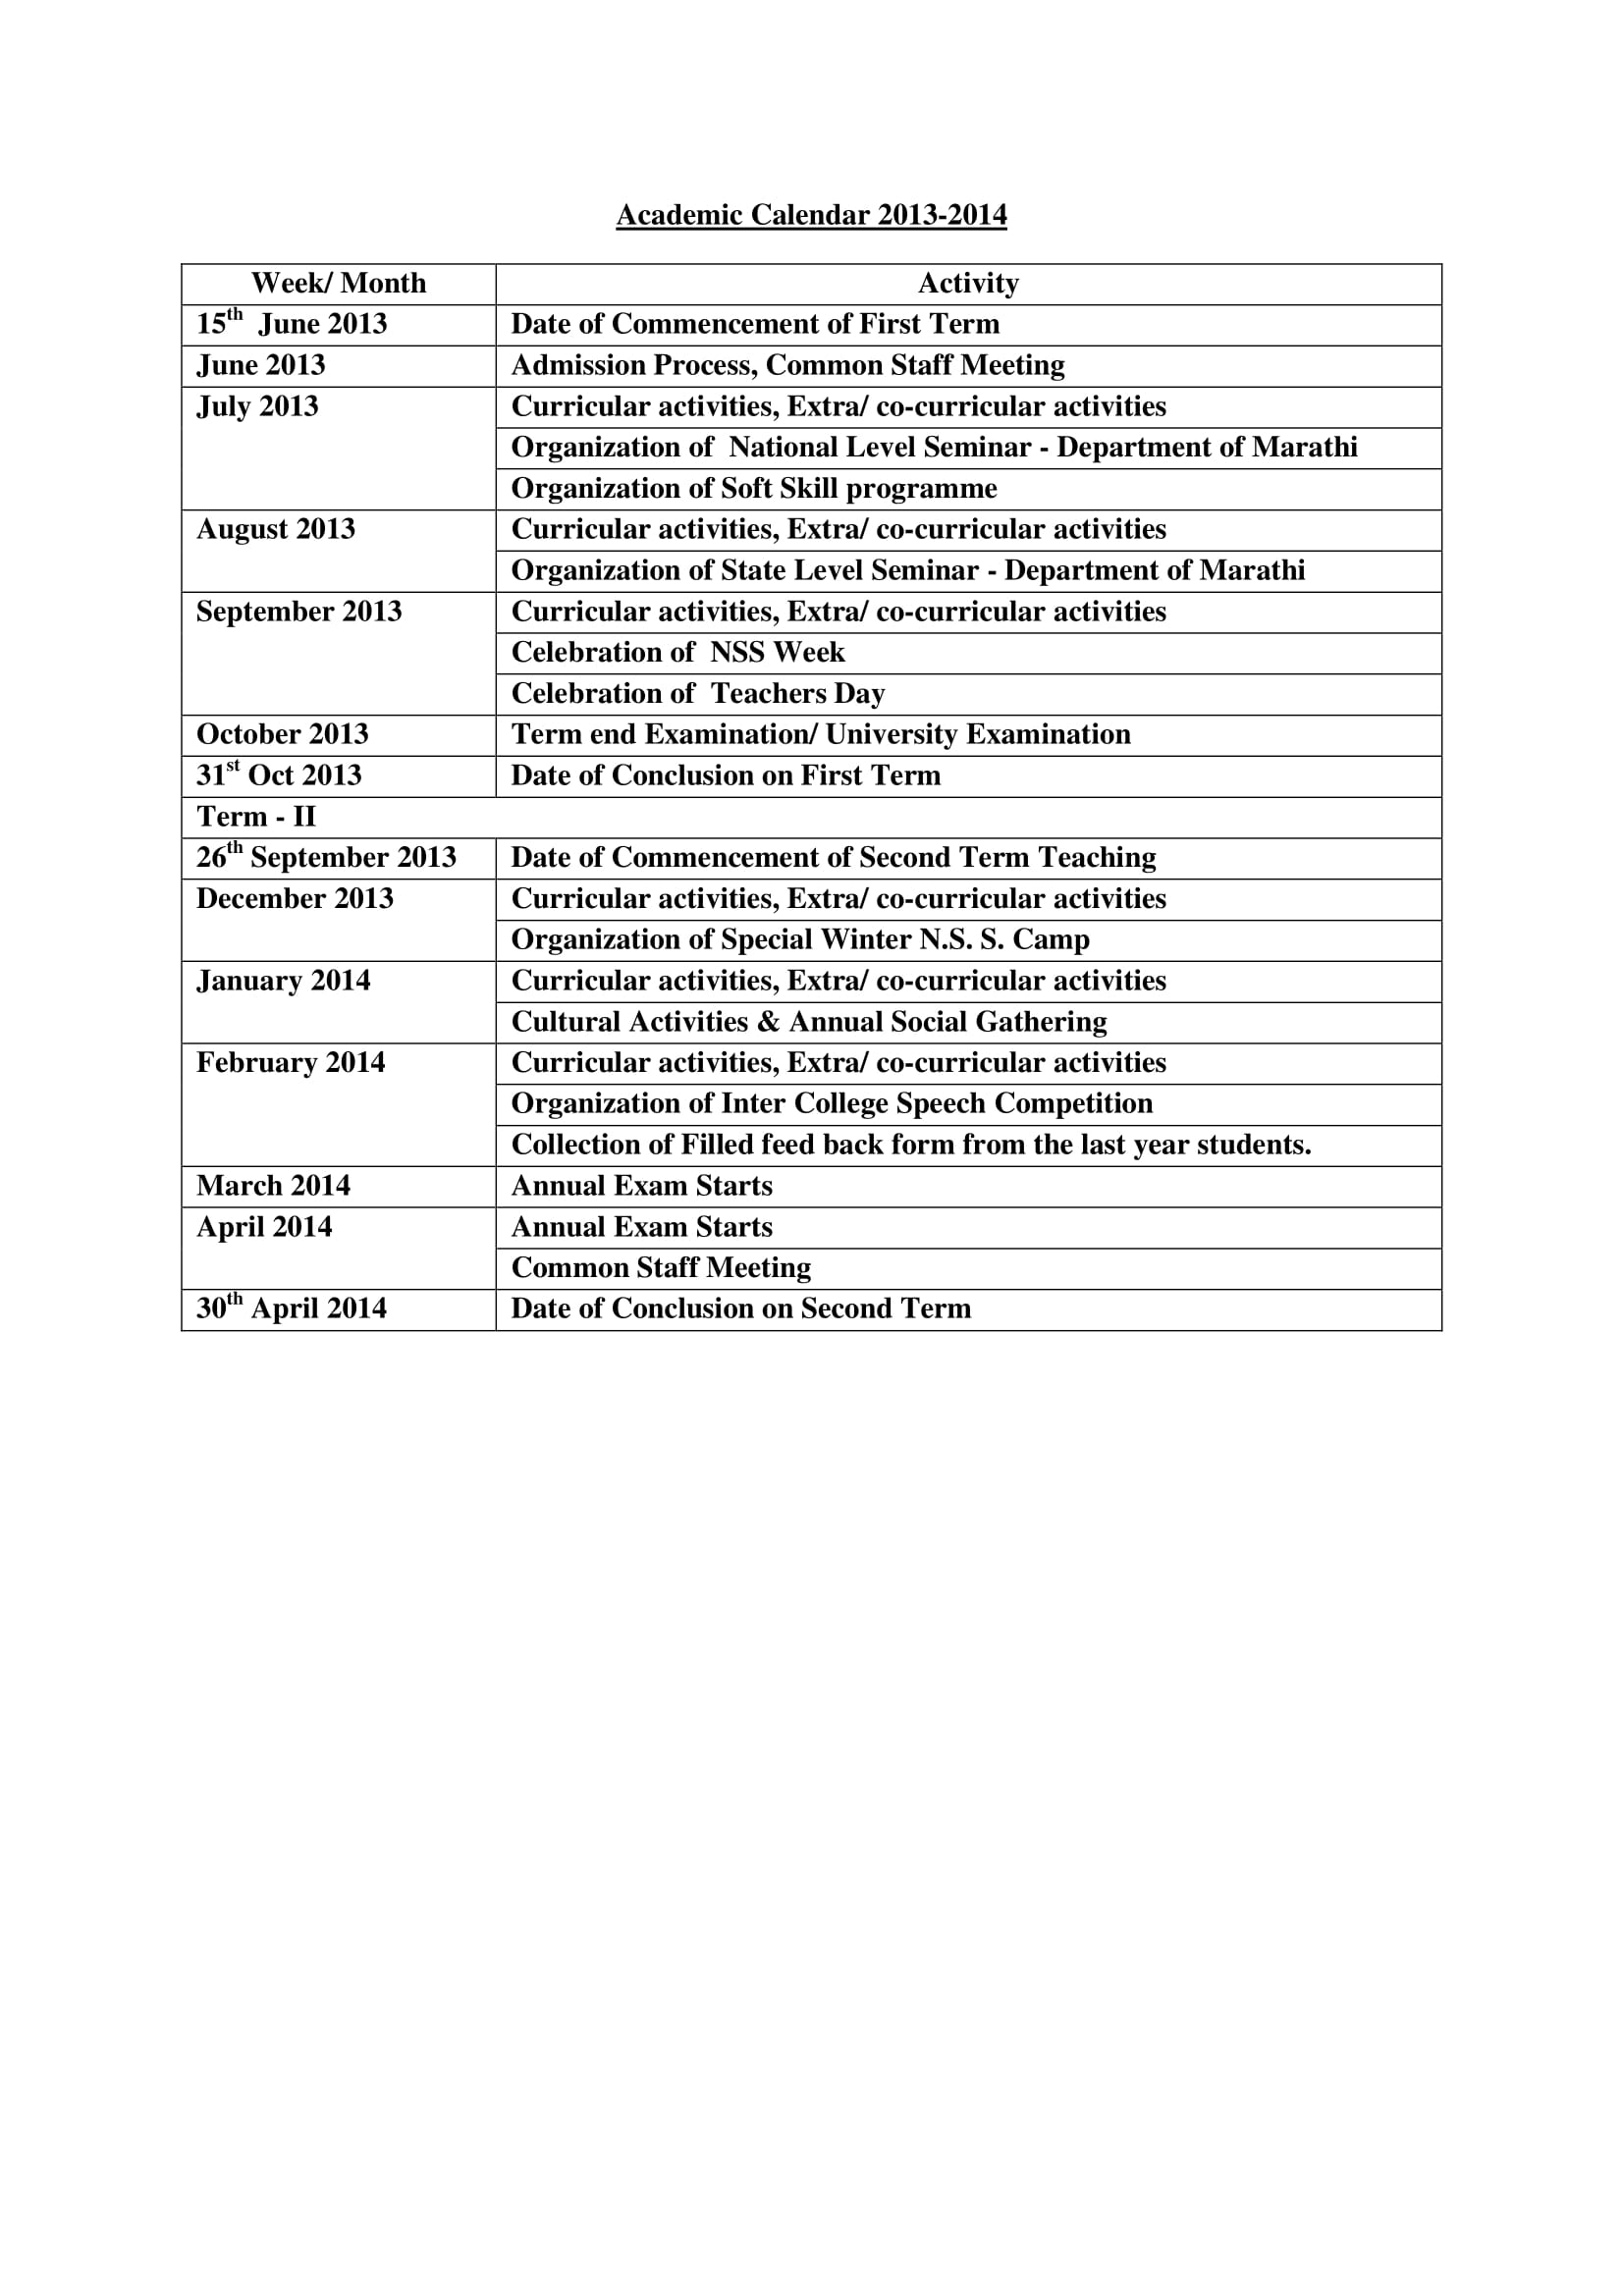 Academic Calendar 2013-14